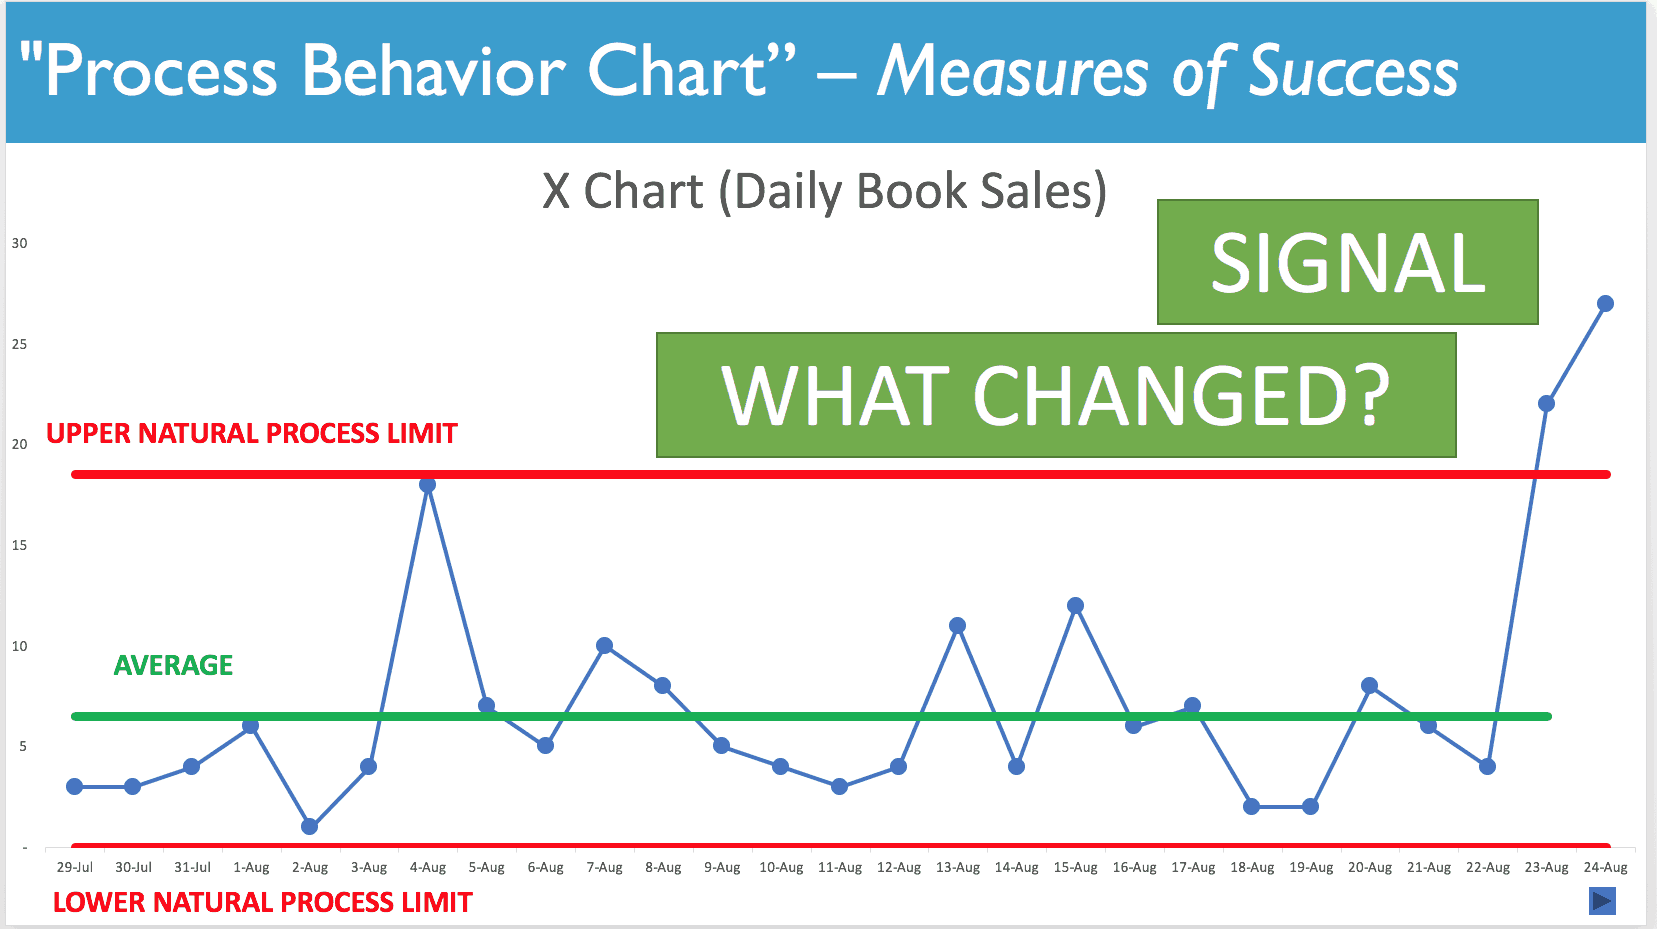 Measures of Success - Process Behavior Chart